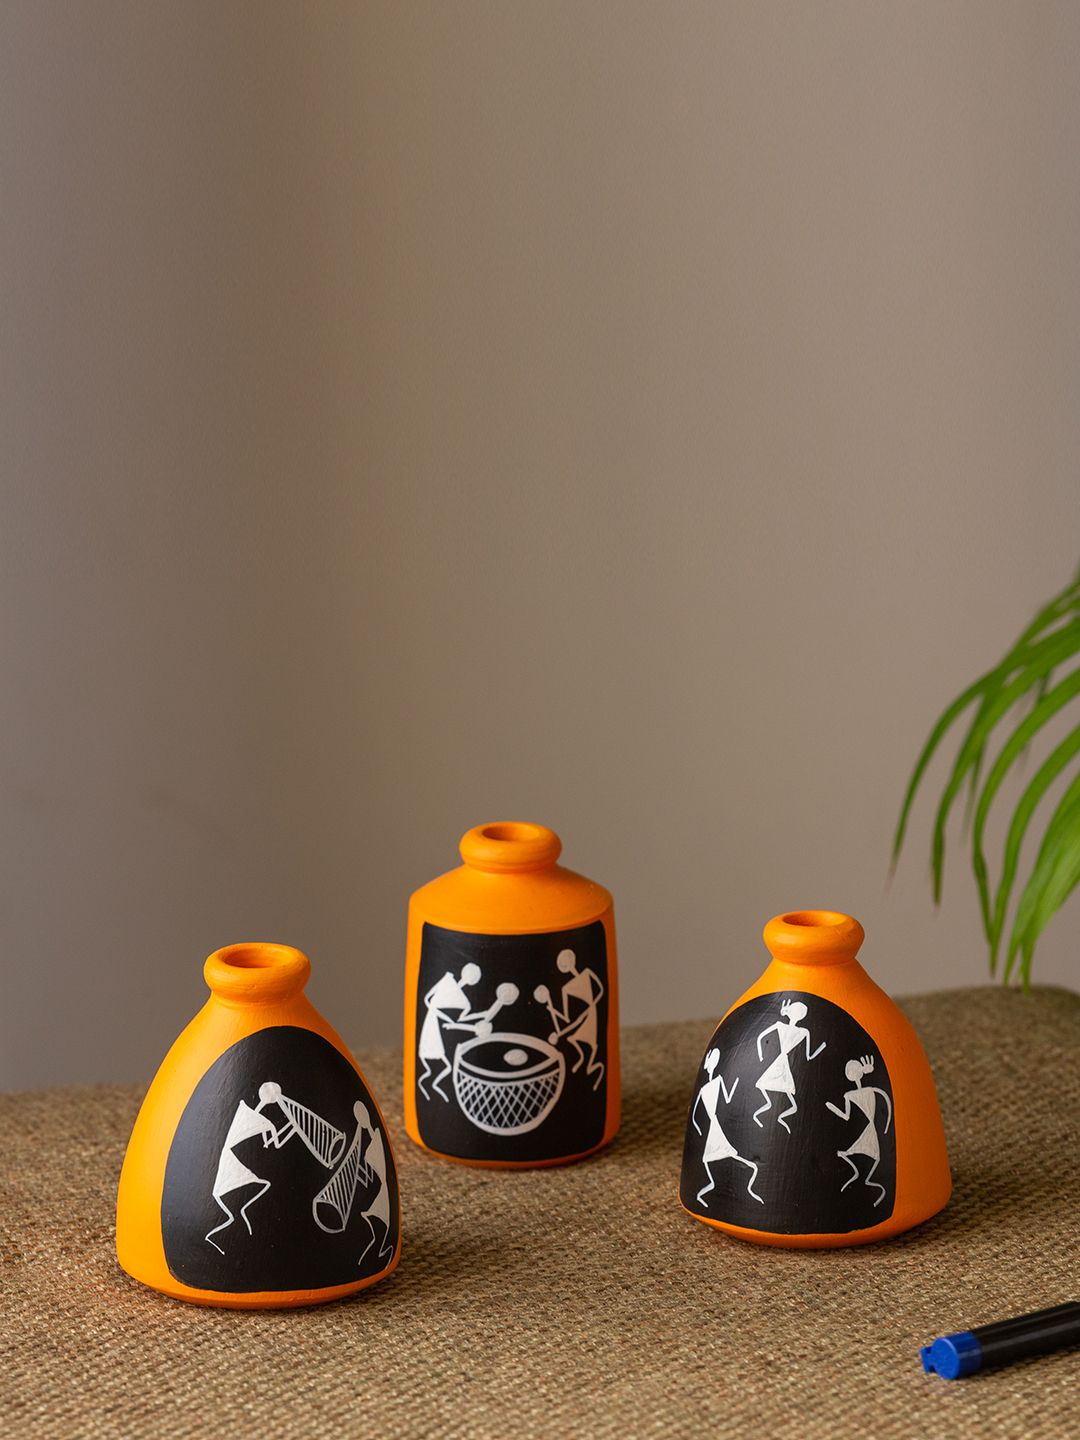 ExclusiveLane Set of 3 Orange & Black Hand-Painted Terracotta Miniature Pots Showpieces Price in India